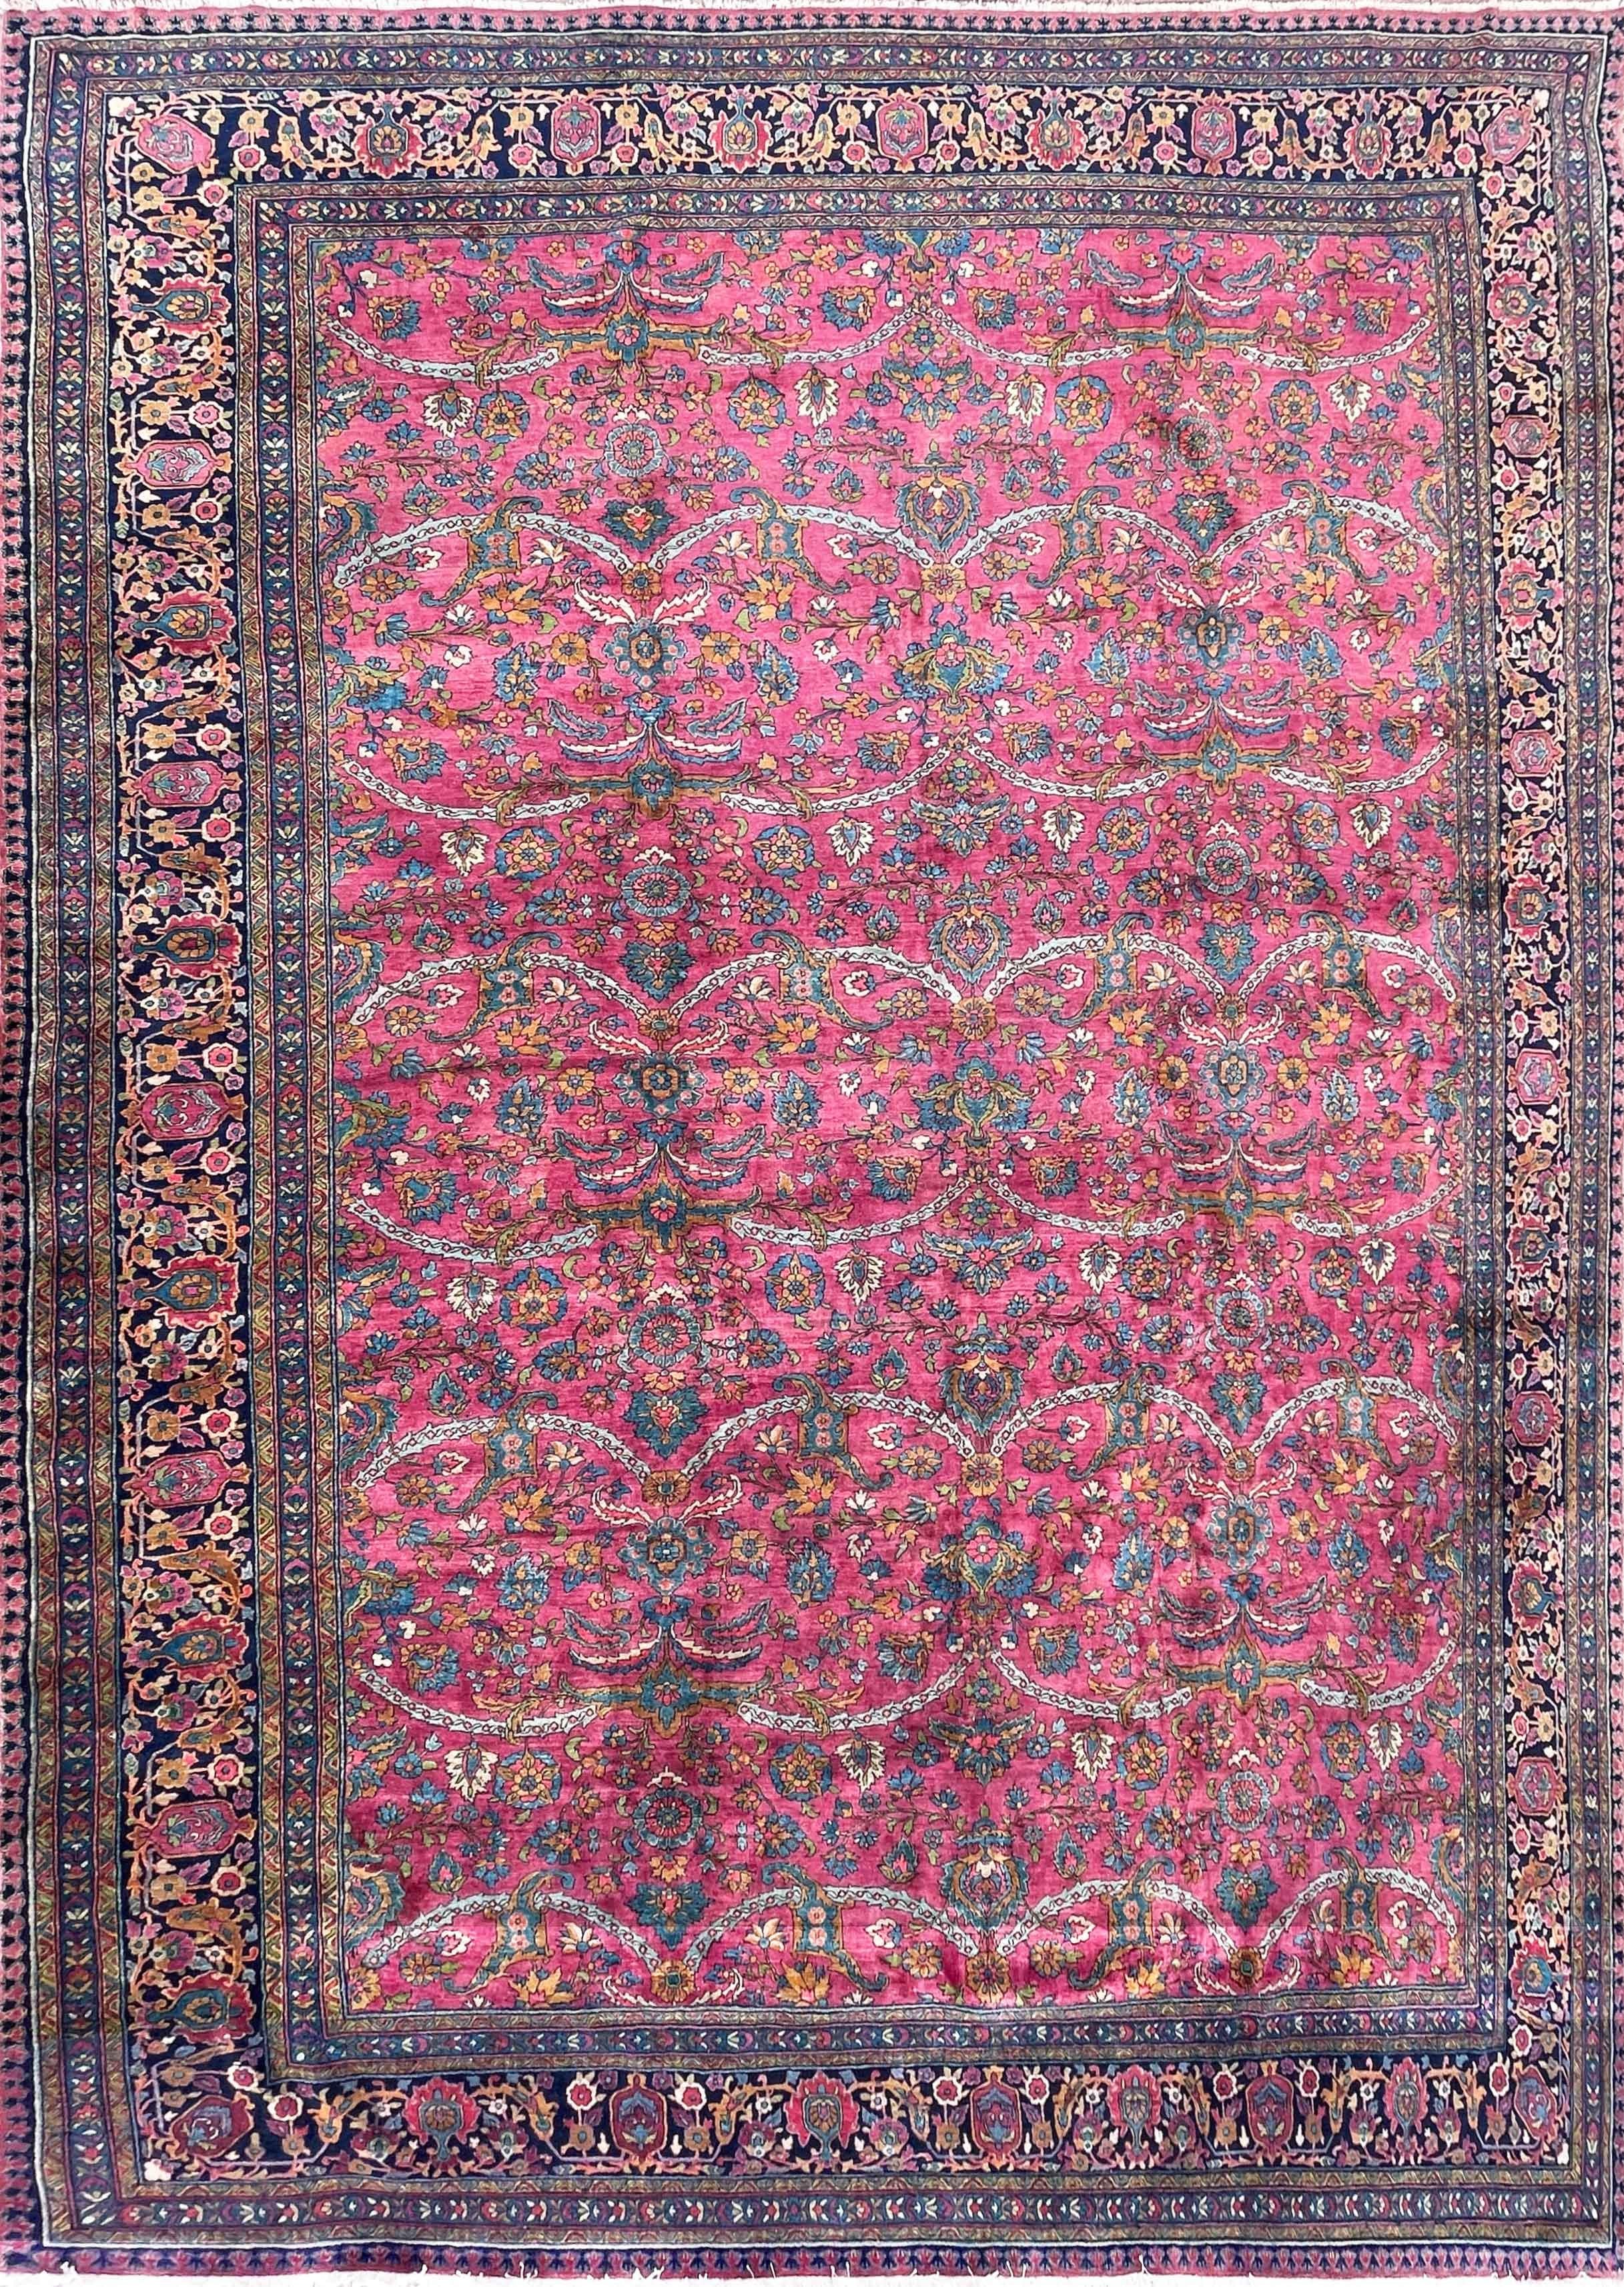 Antique Persian Mohajeran Sarouk carpet, Most Unusual For Sale 4